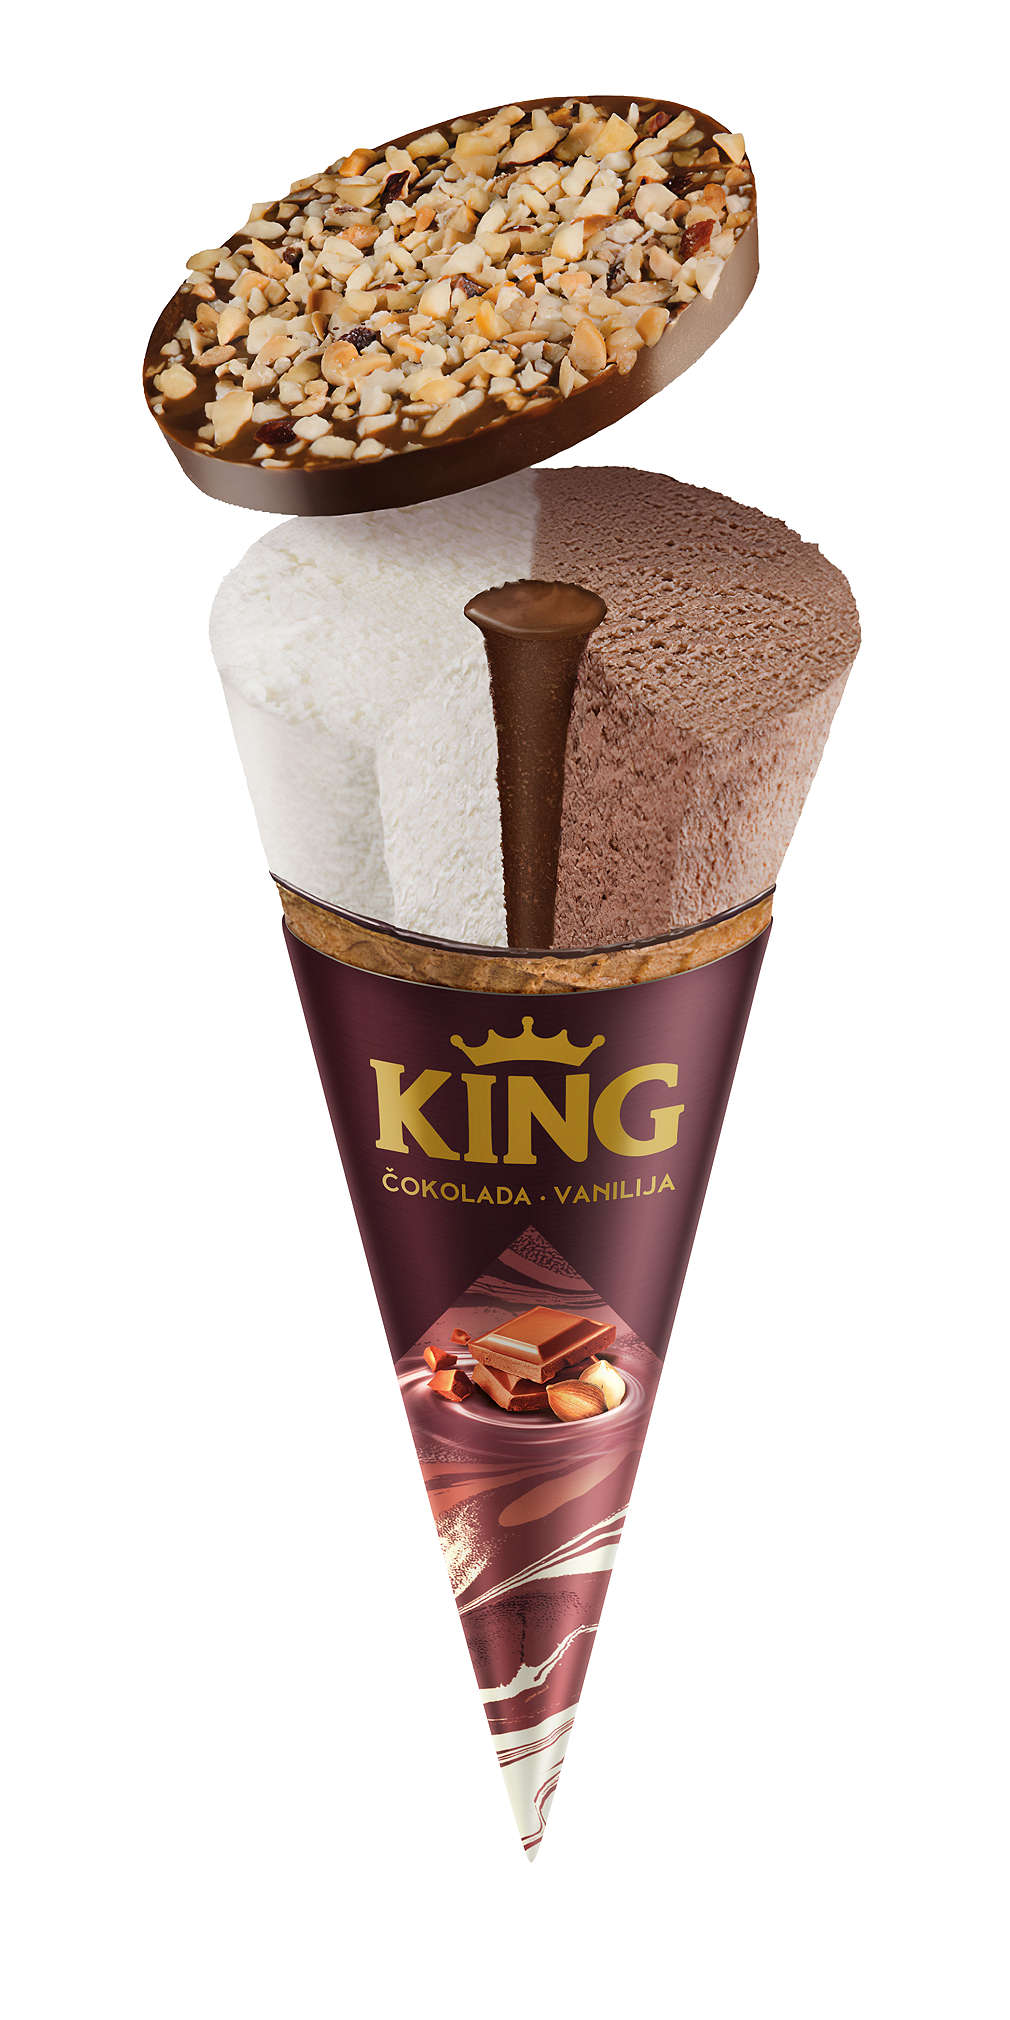 Fotografija ponude King Sladoled